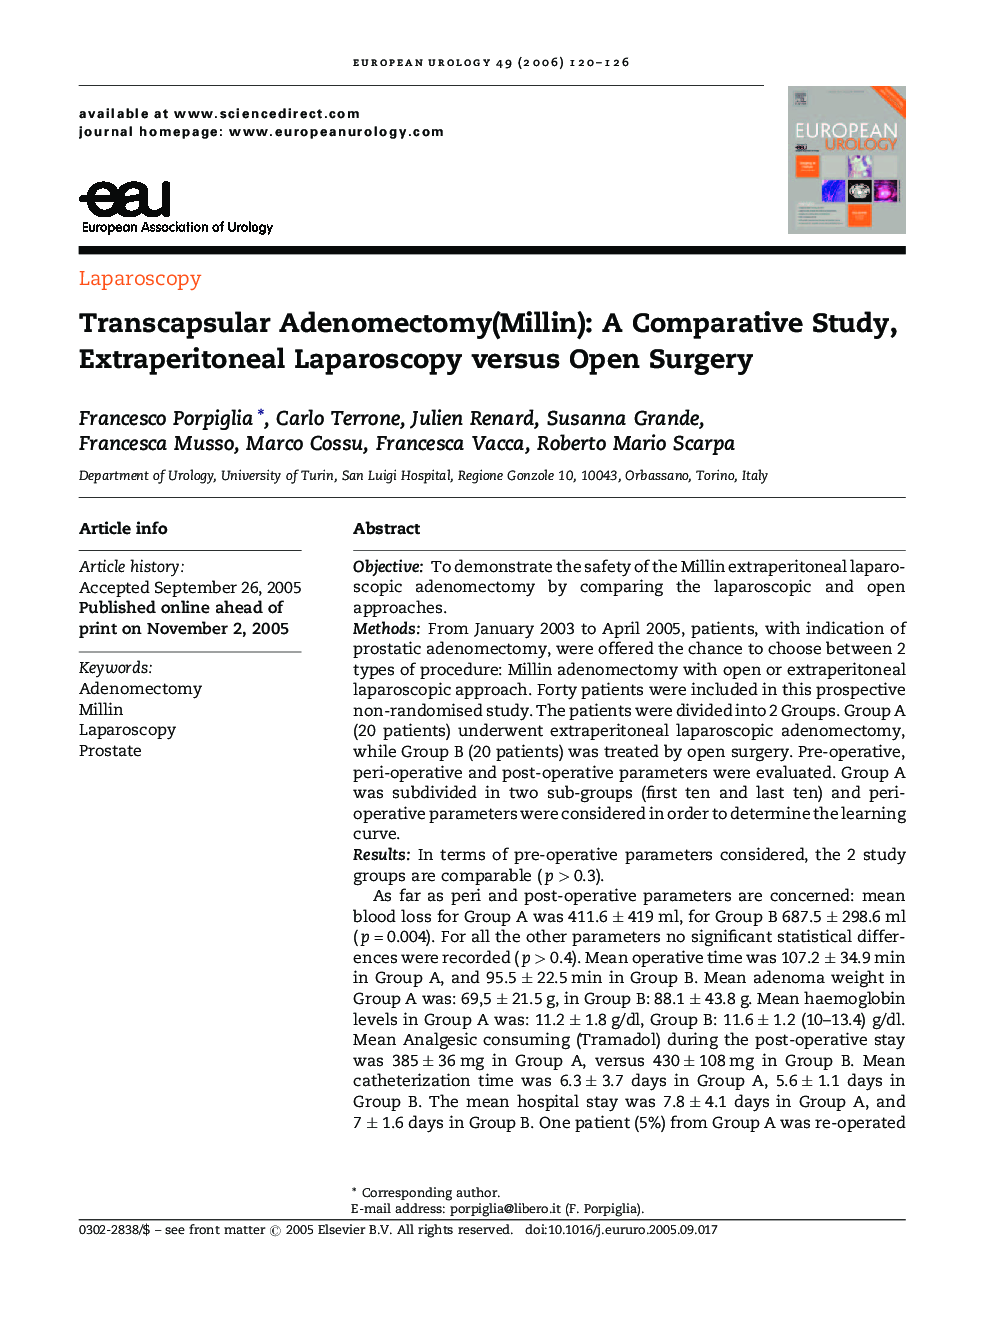 Transcapsular Adenomectomy(Millin): A Comparative Study, Extraperitoneal Laparoscopy versus Open Surgery